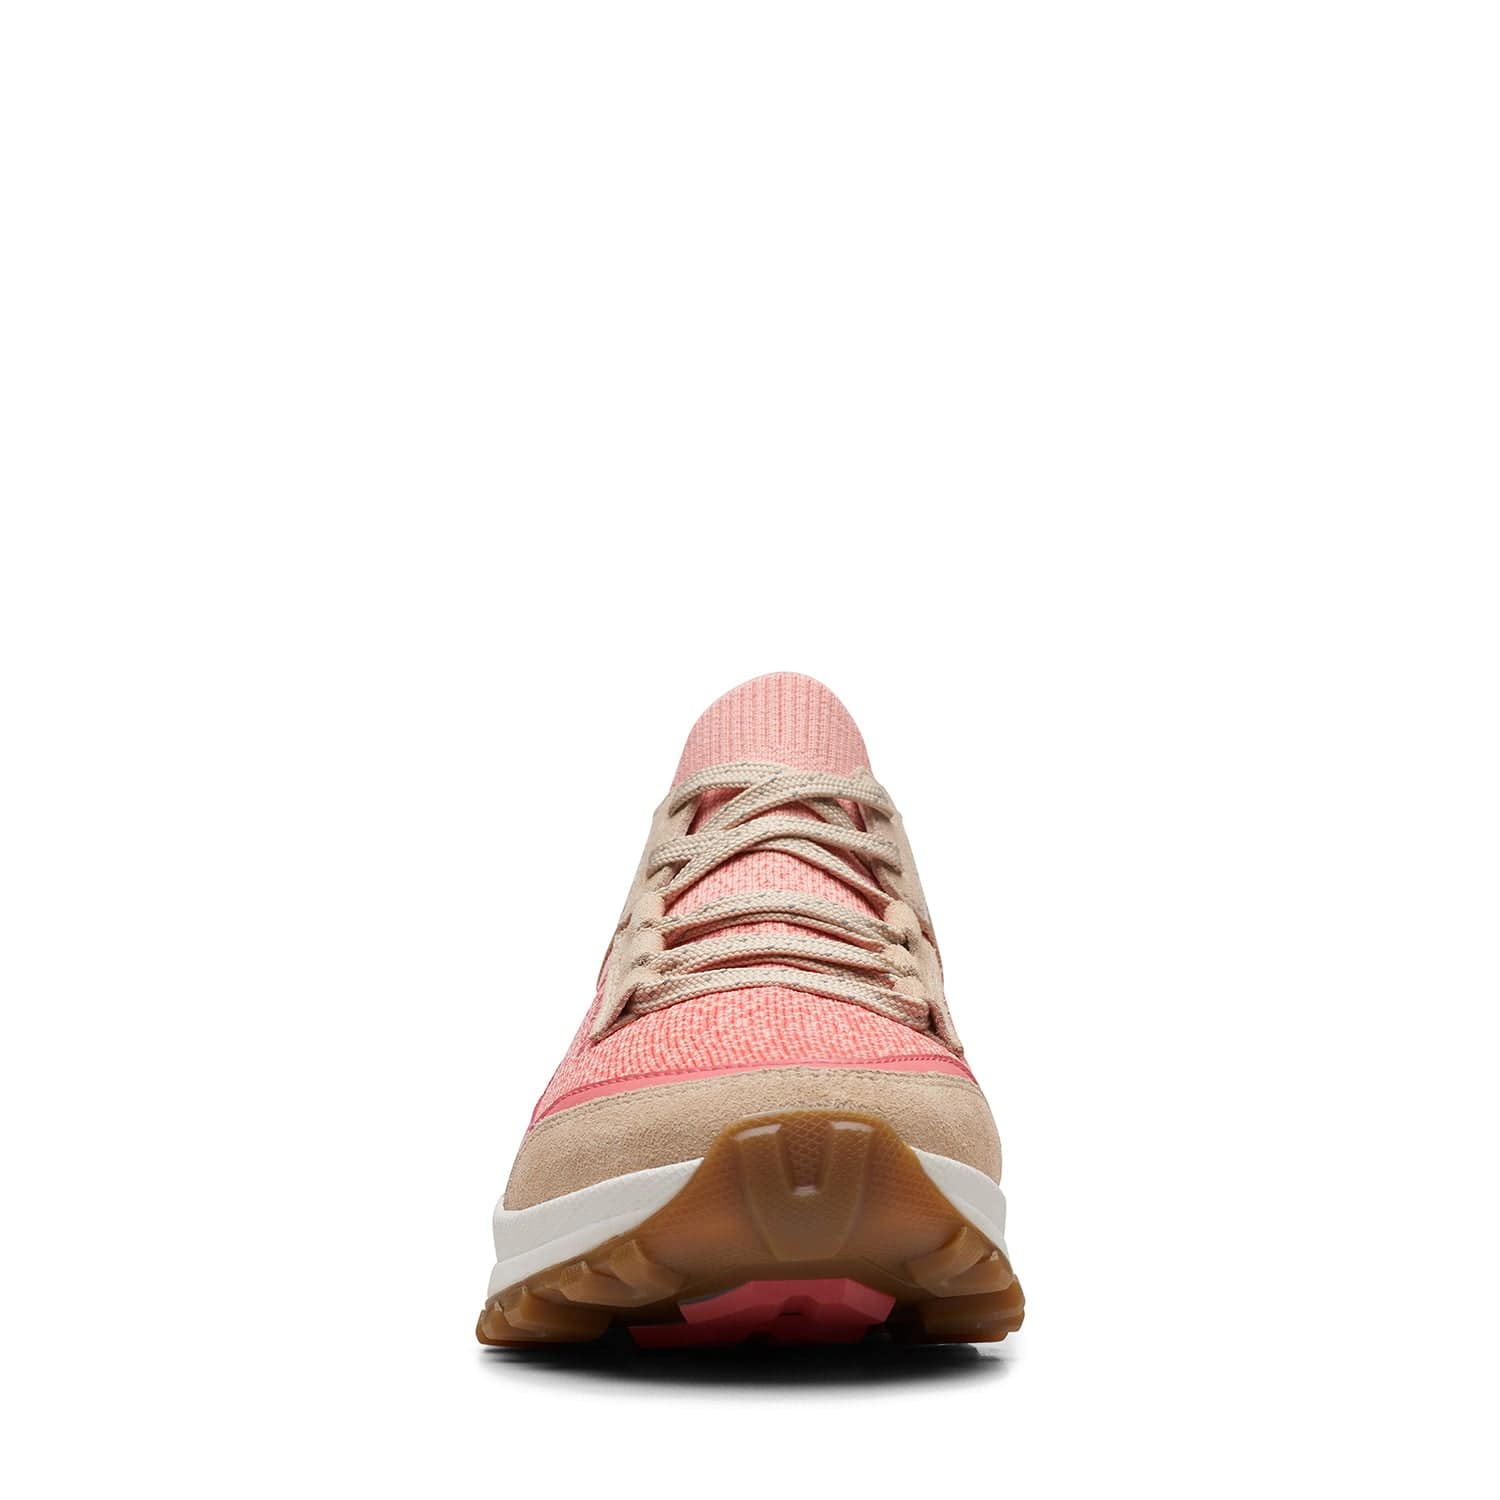 Clarks Atltrekknit Wp - Shoes - Peach Combi - 261705714 - D Width (Standard Fit)